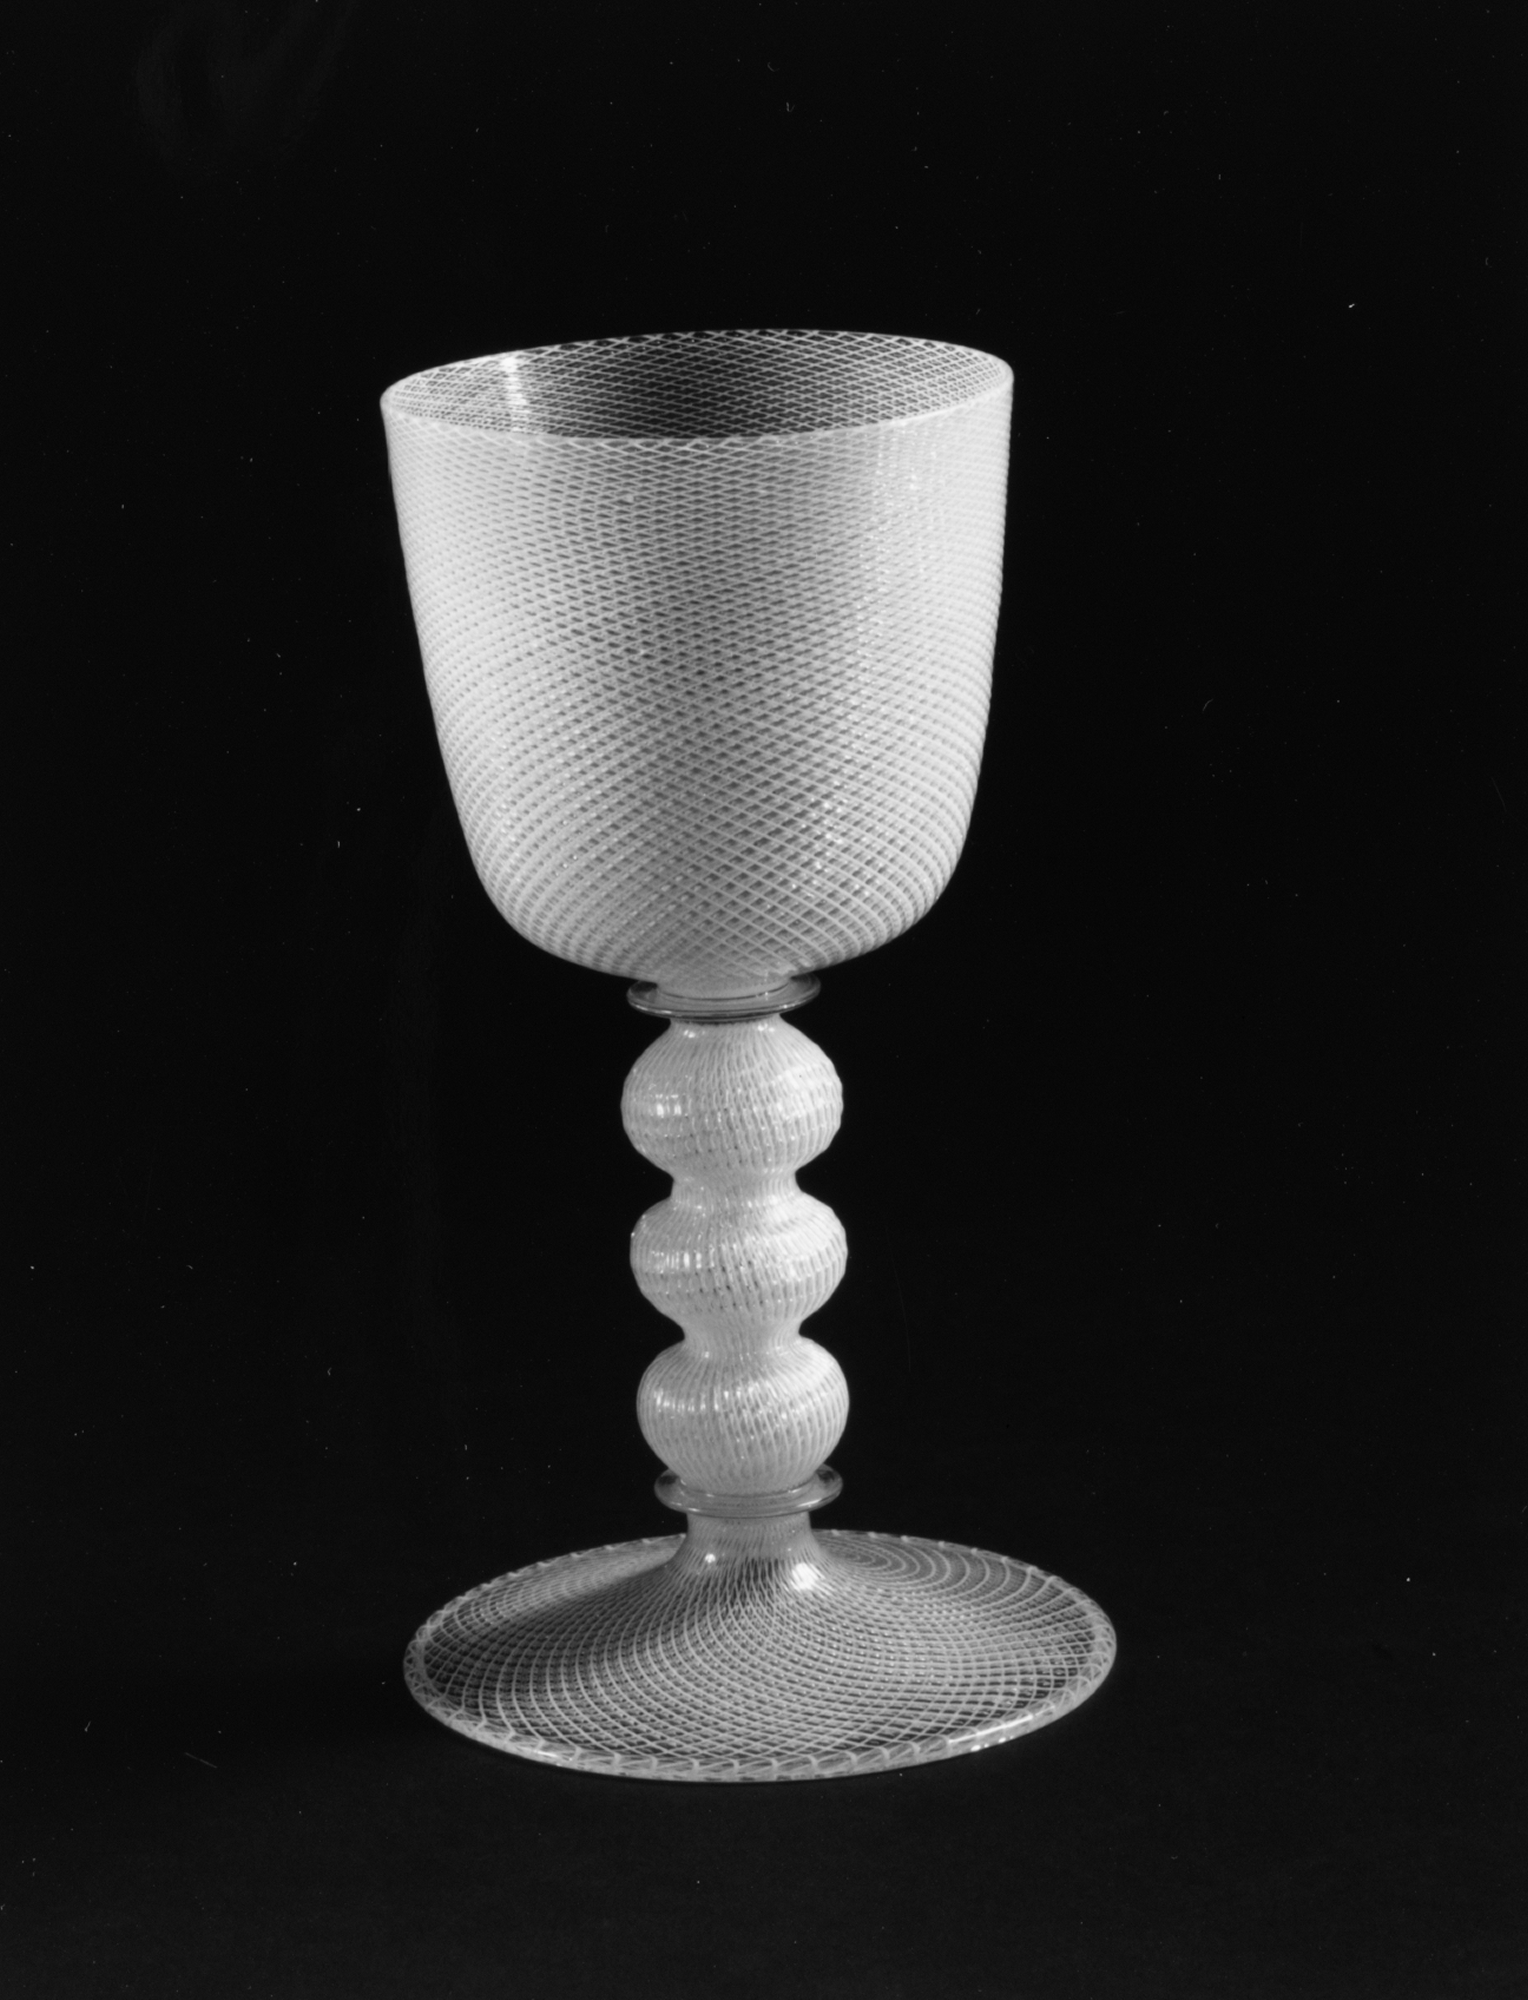 Venice Goblet Cocktail Glasses, Modern Glassware Collection